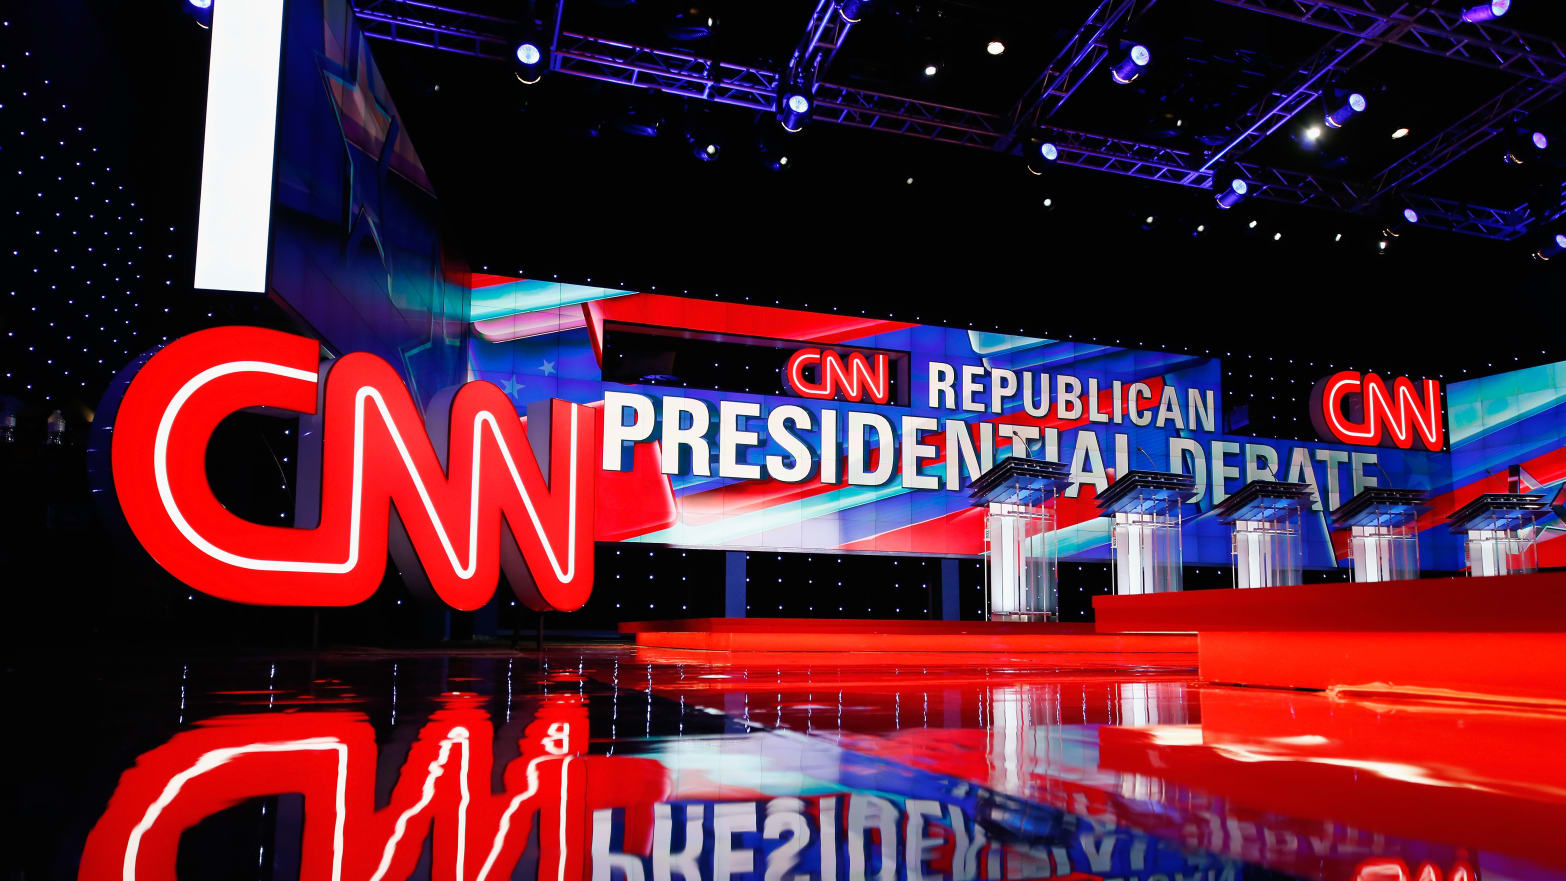 The main stage of a CNN Republican presidential debate in 2016.